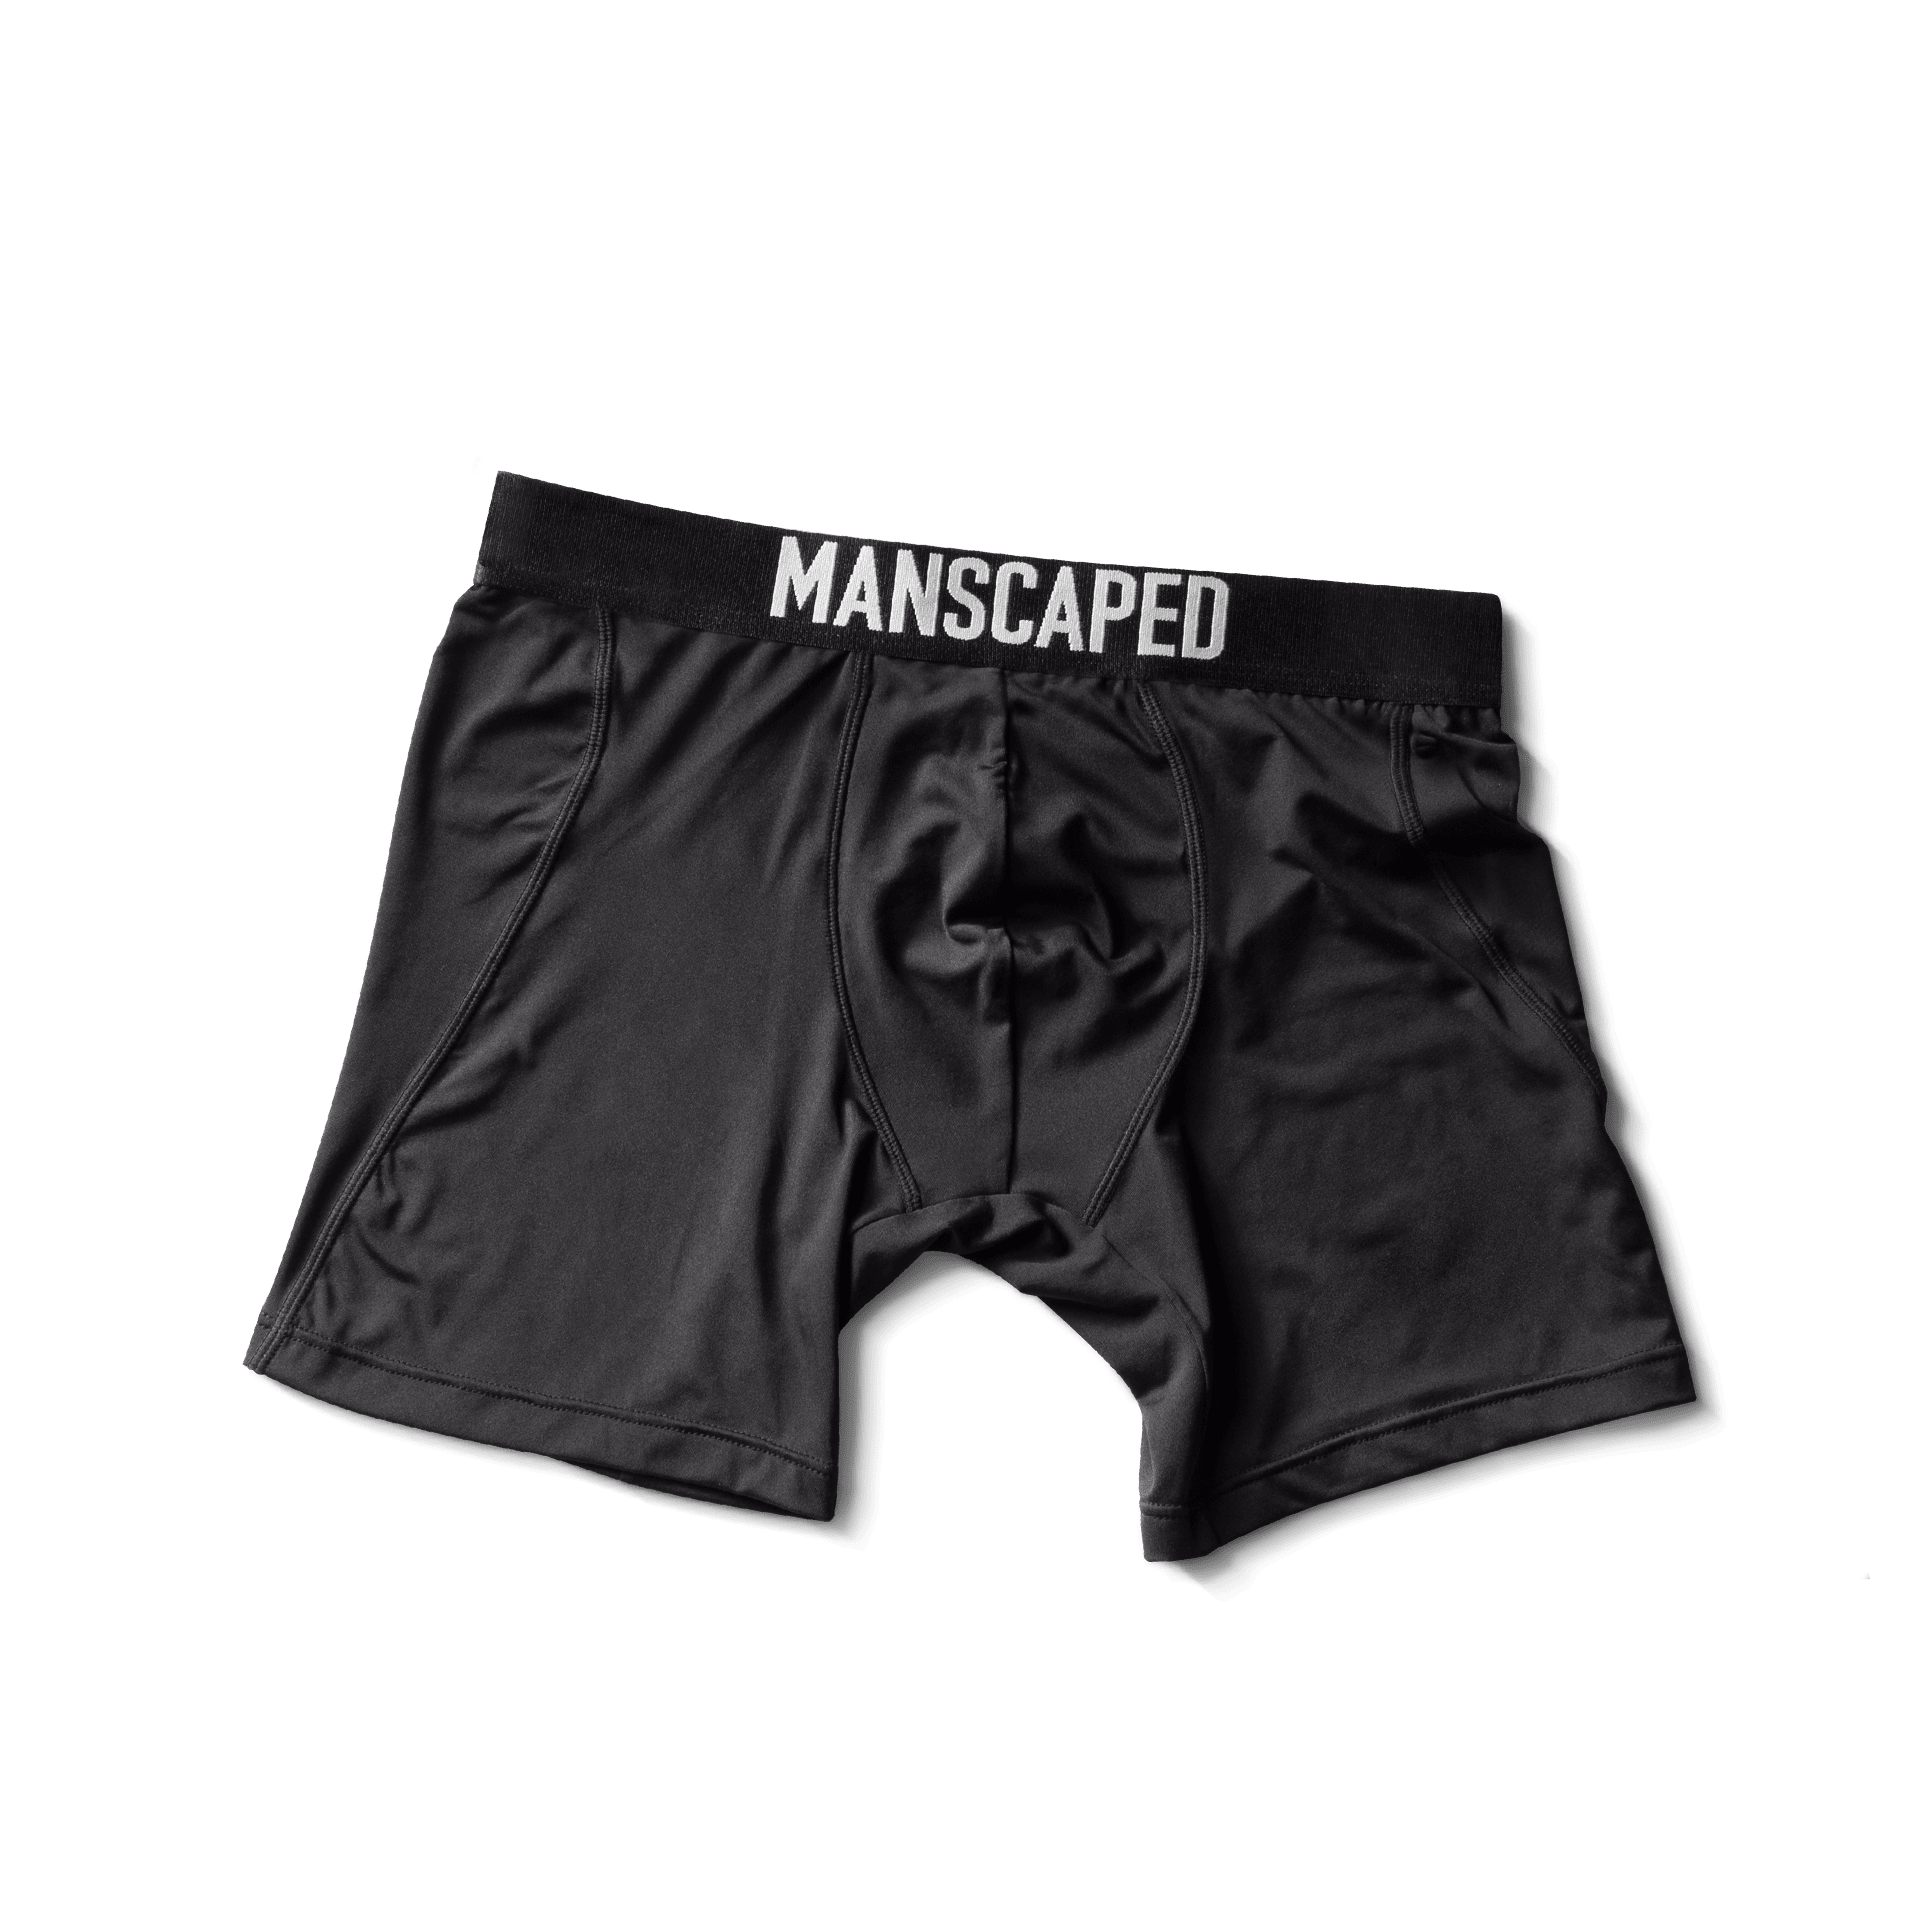 MANSCAPED® Boxers, Performance Boxer Briefs